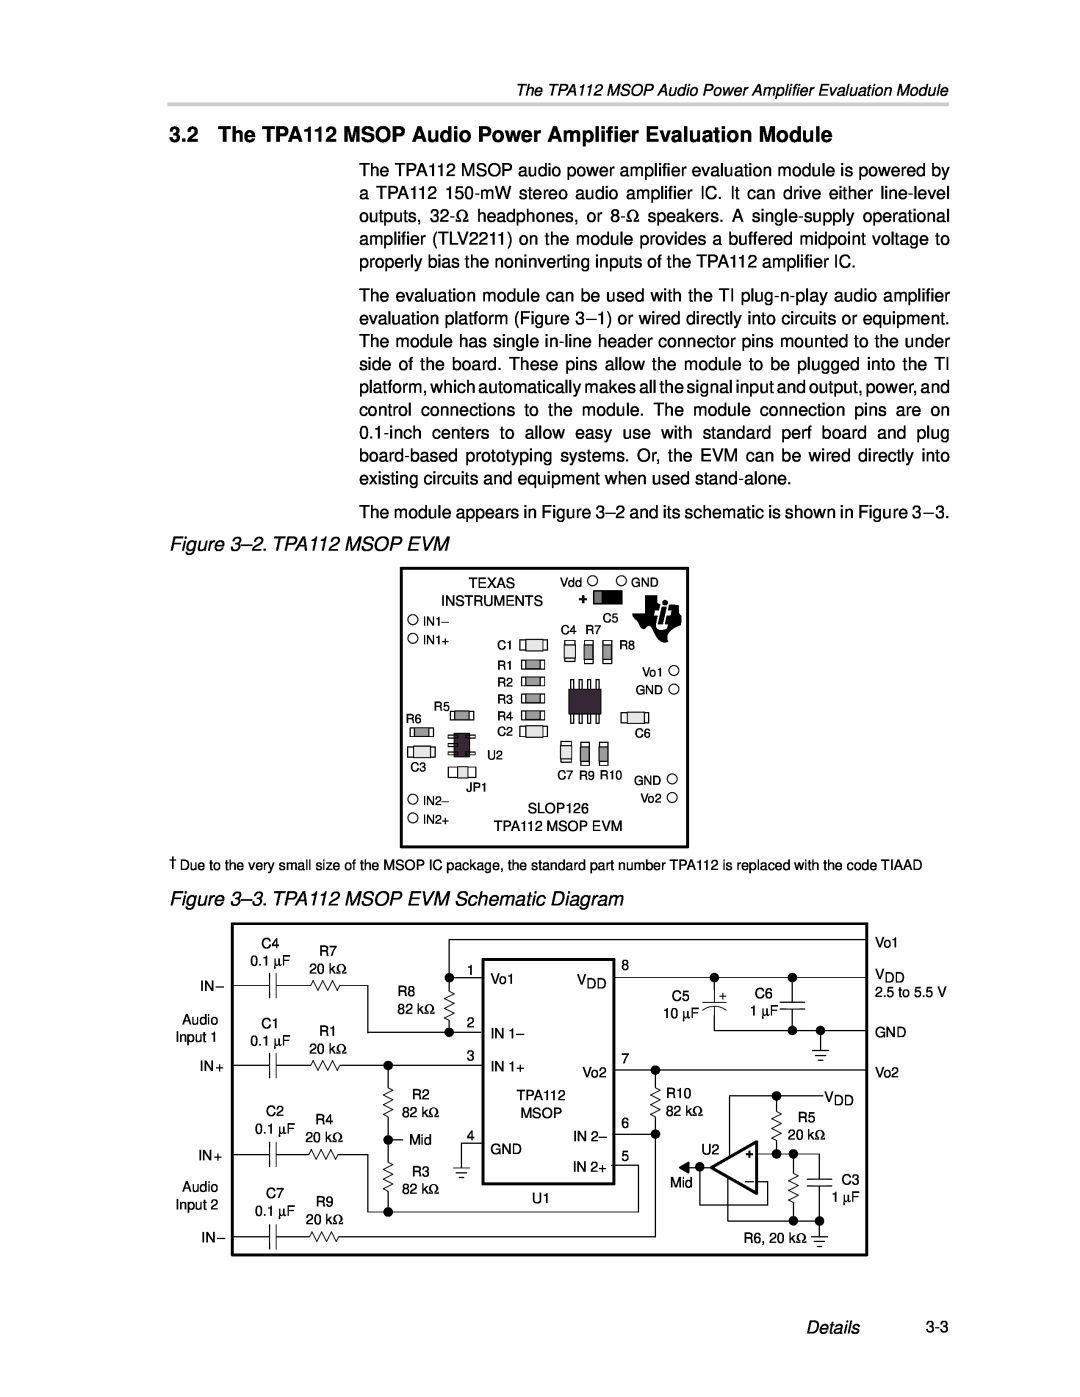 Texas Instruments SLOU023A manual 2.TPA112 MSOP EVM, 3.TPA112 MSOP EVM Schematic Diagram, Details 